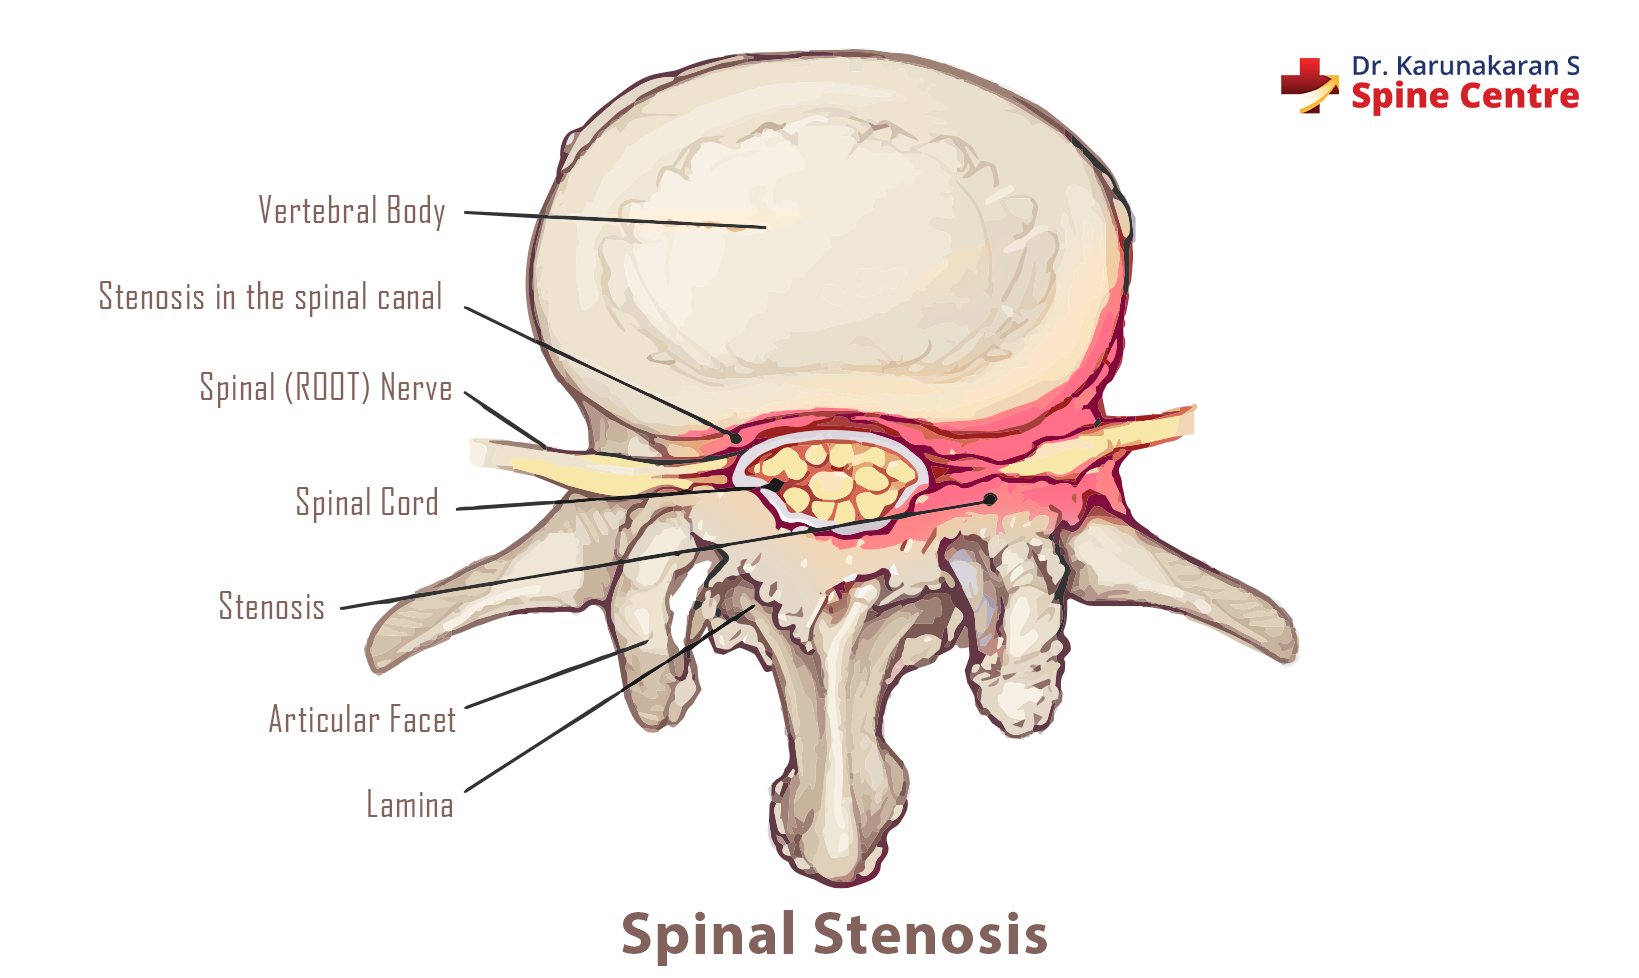 Symptoms of spinal stenosis